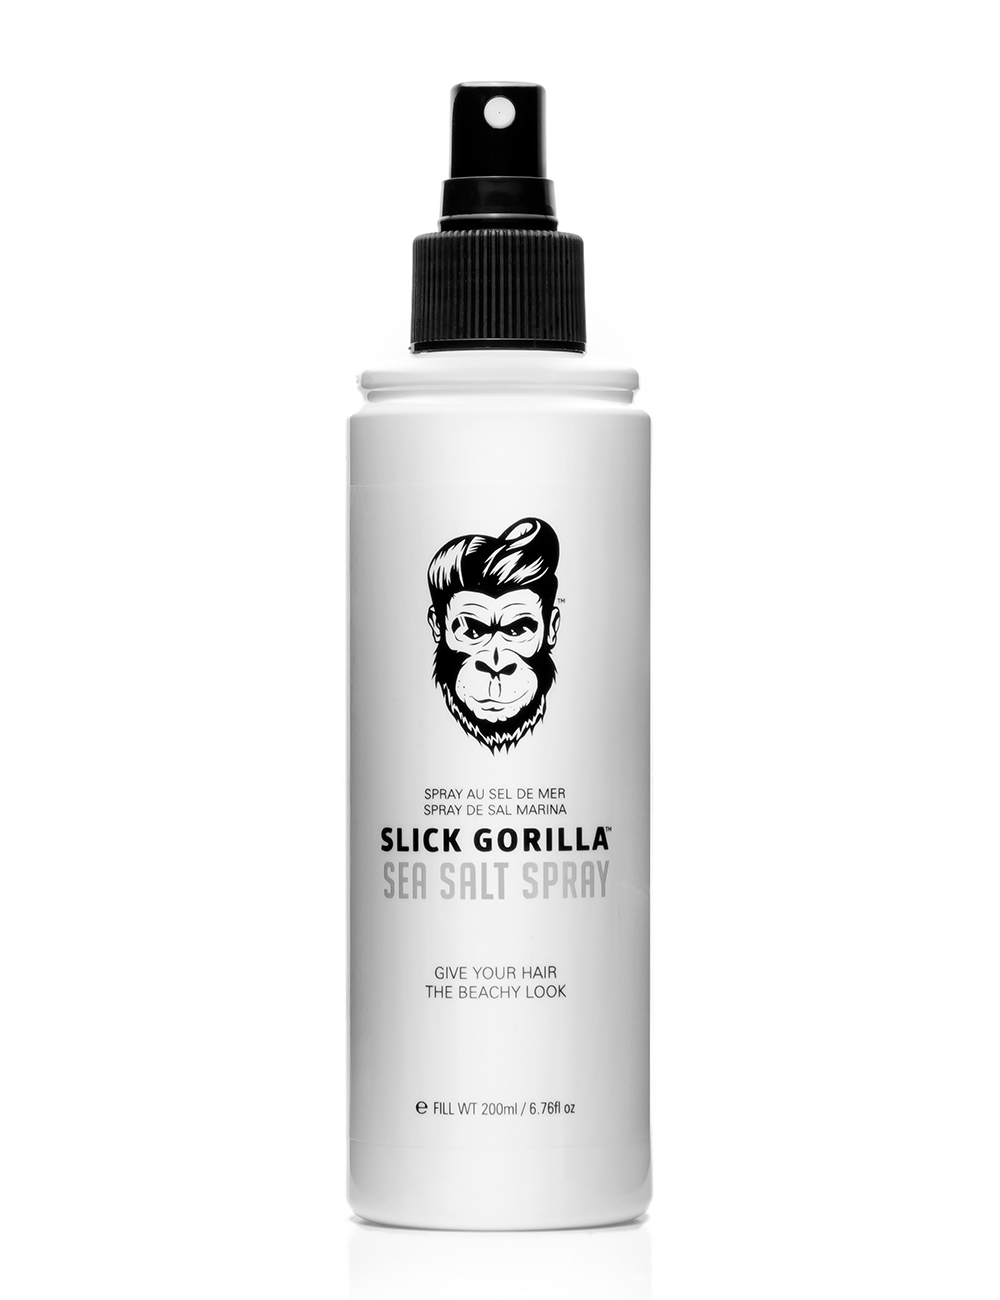 Slick Gorilla Sea Salt Spray Hair Styling Product 200ml